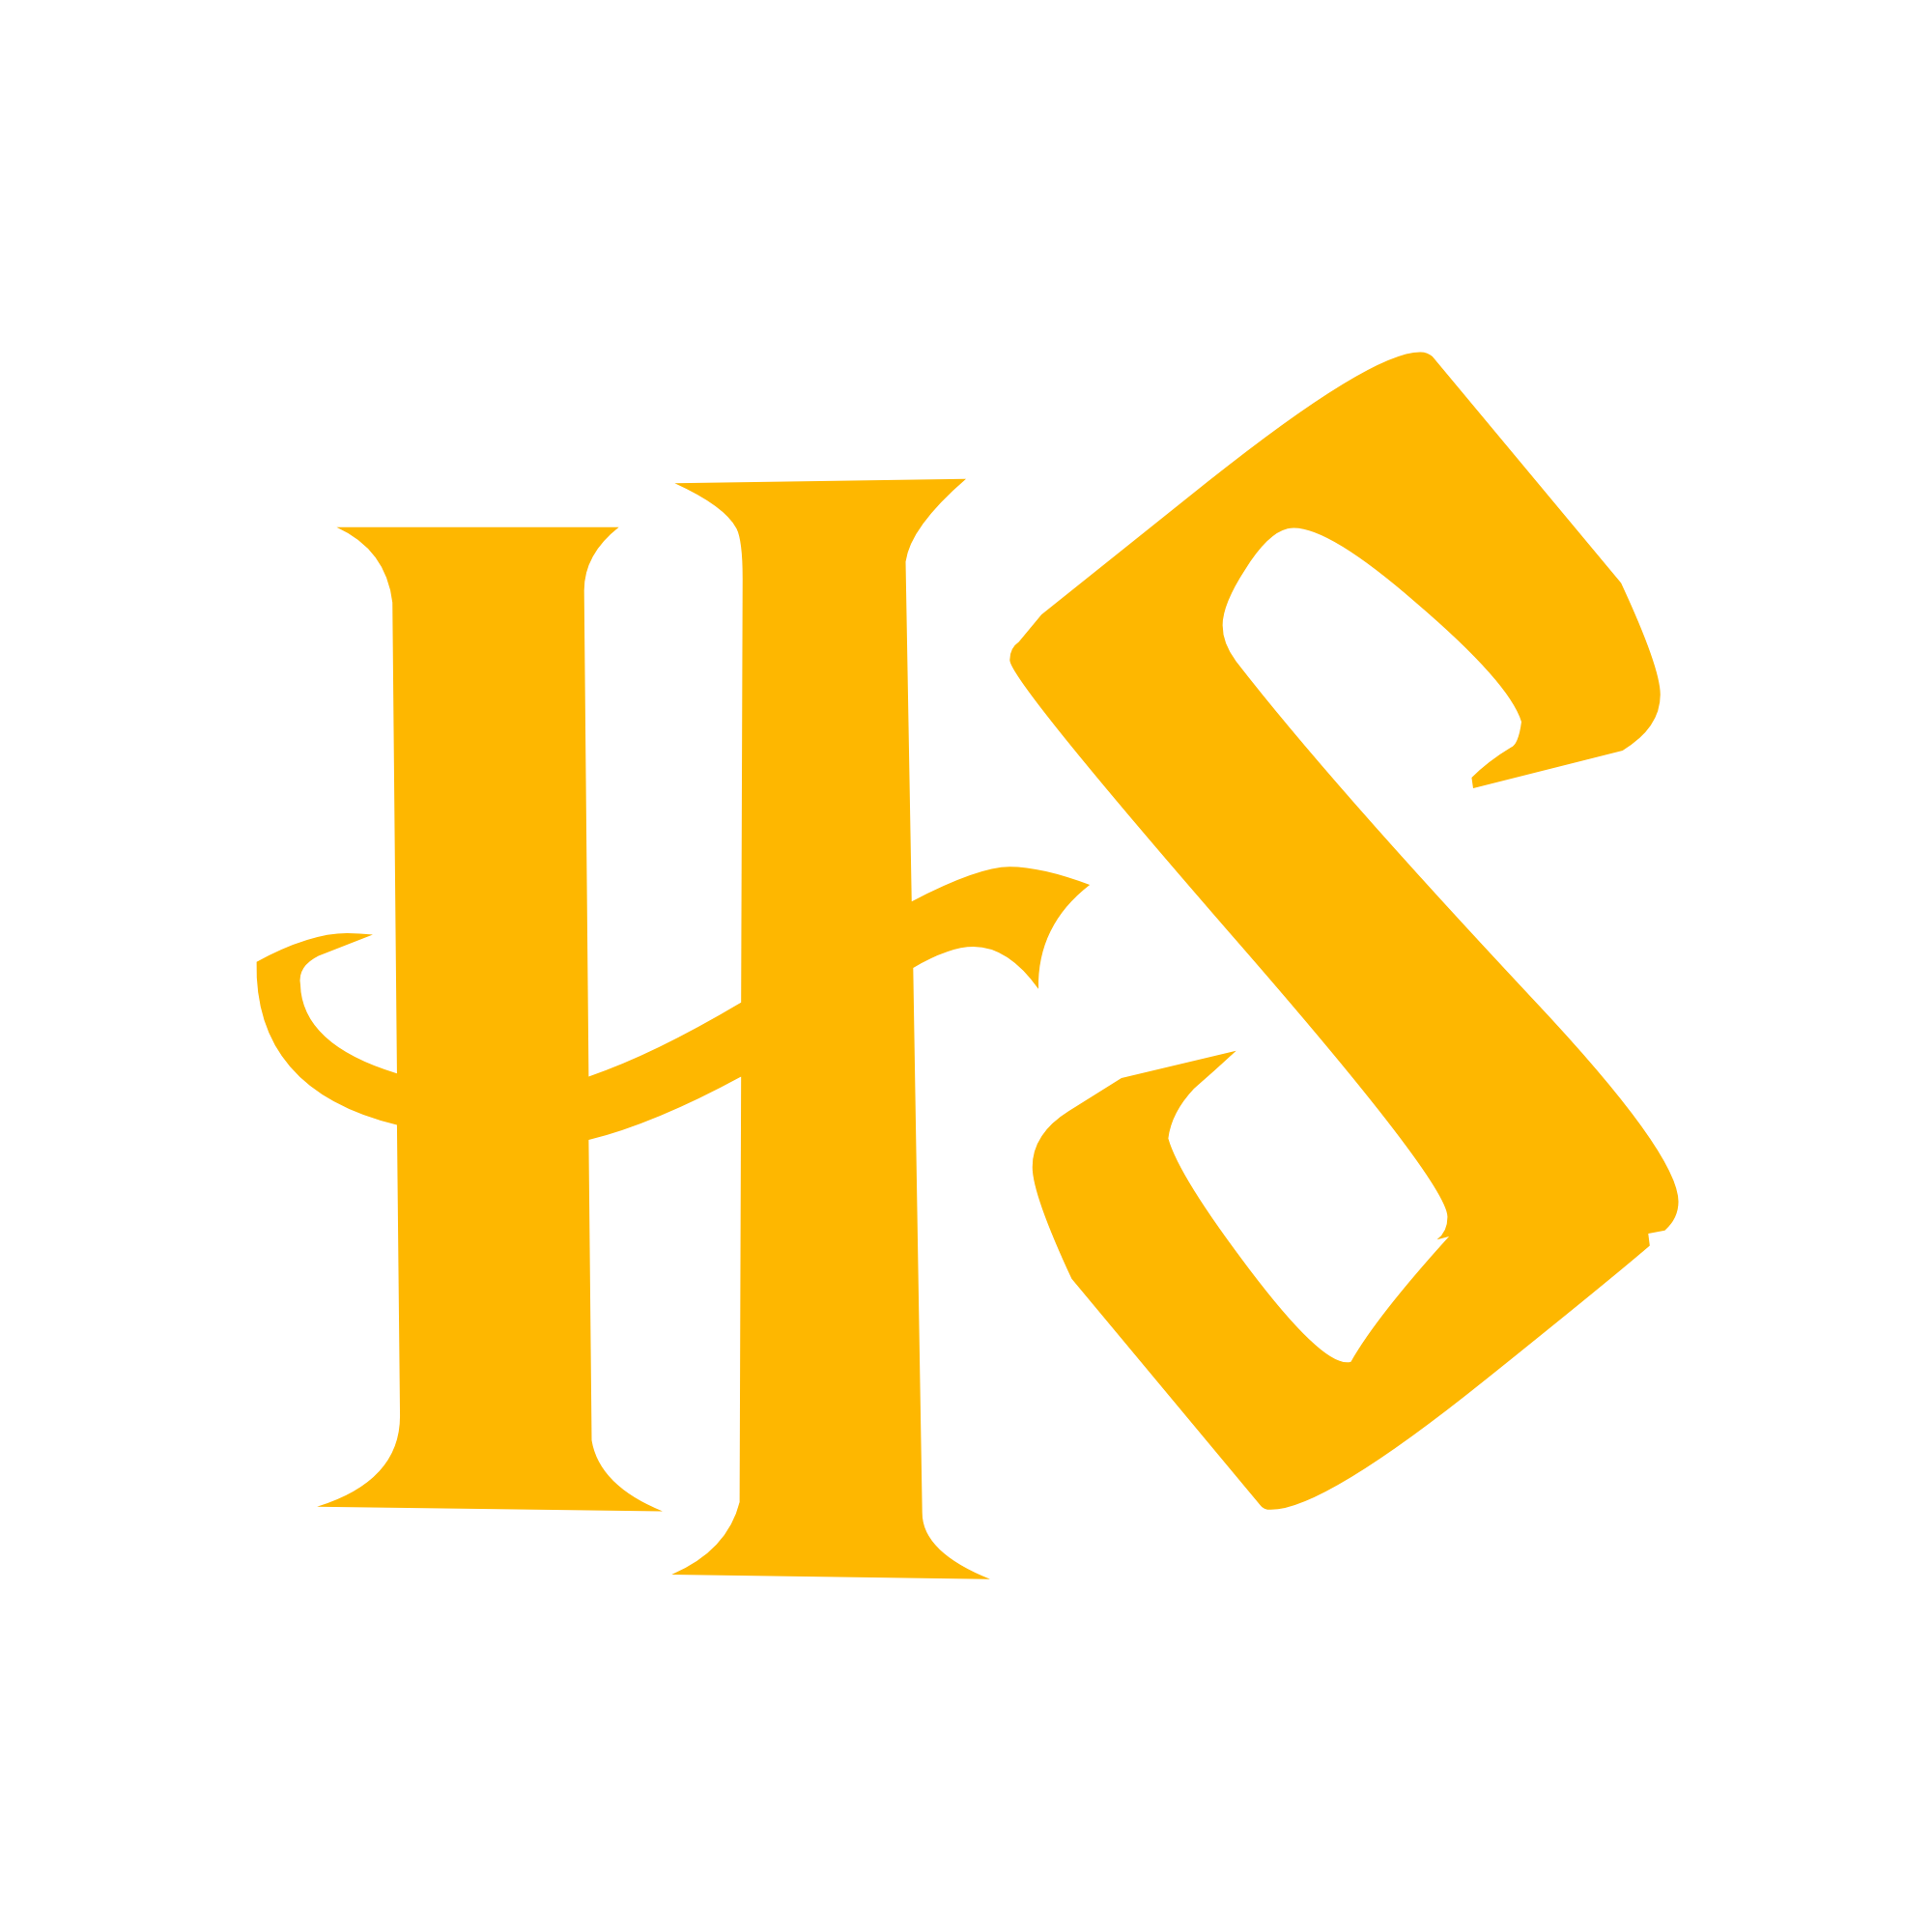 Hogwartsschool logo